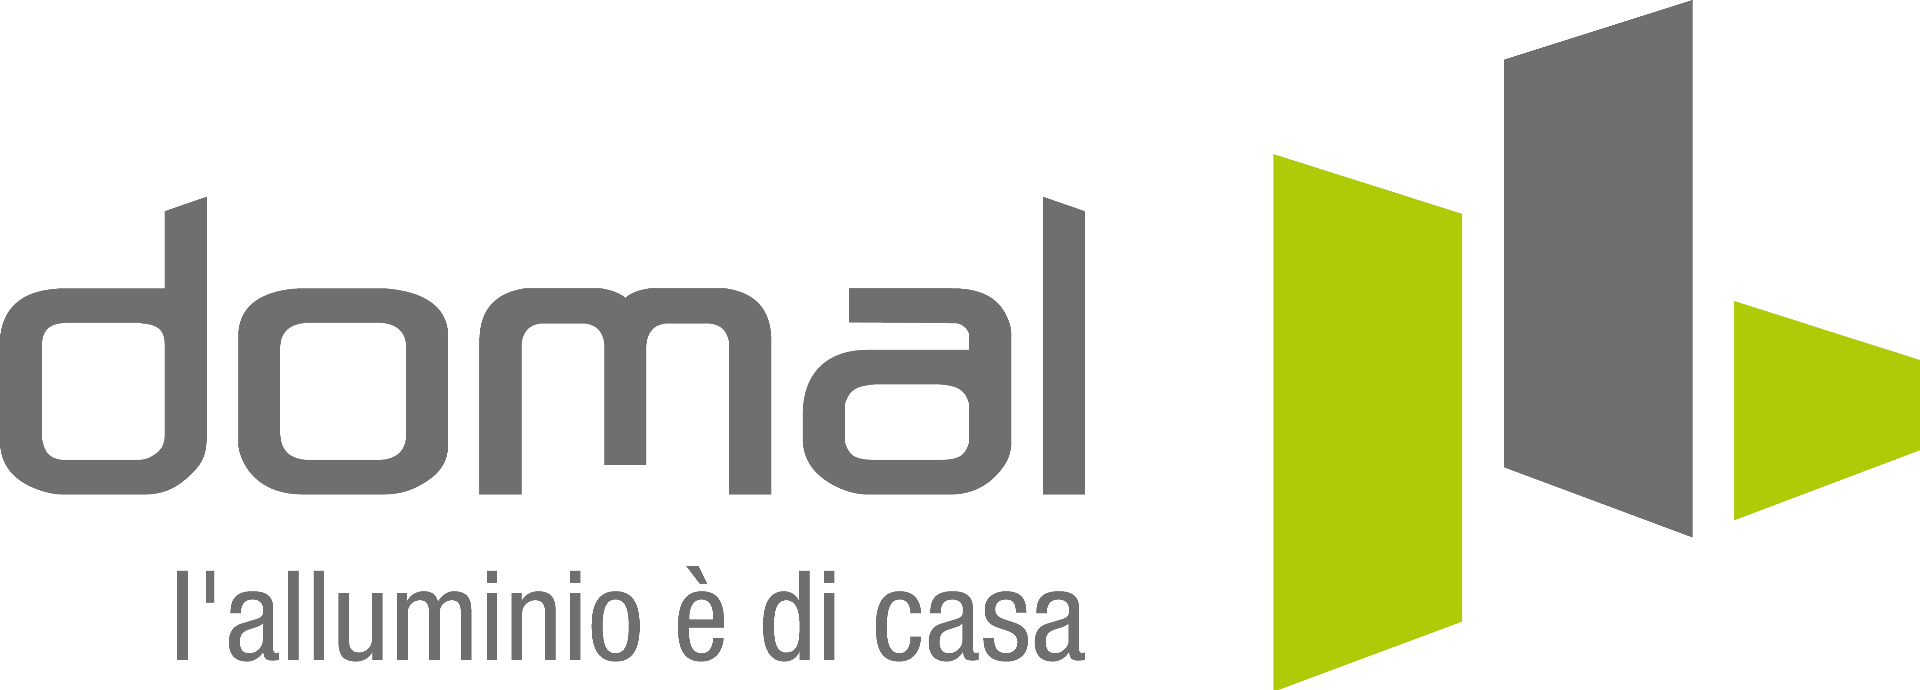 Logo DOMAL